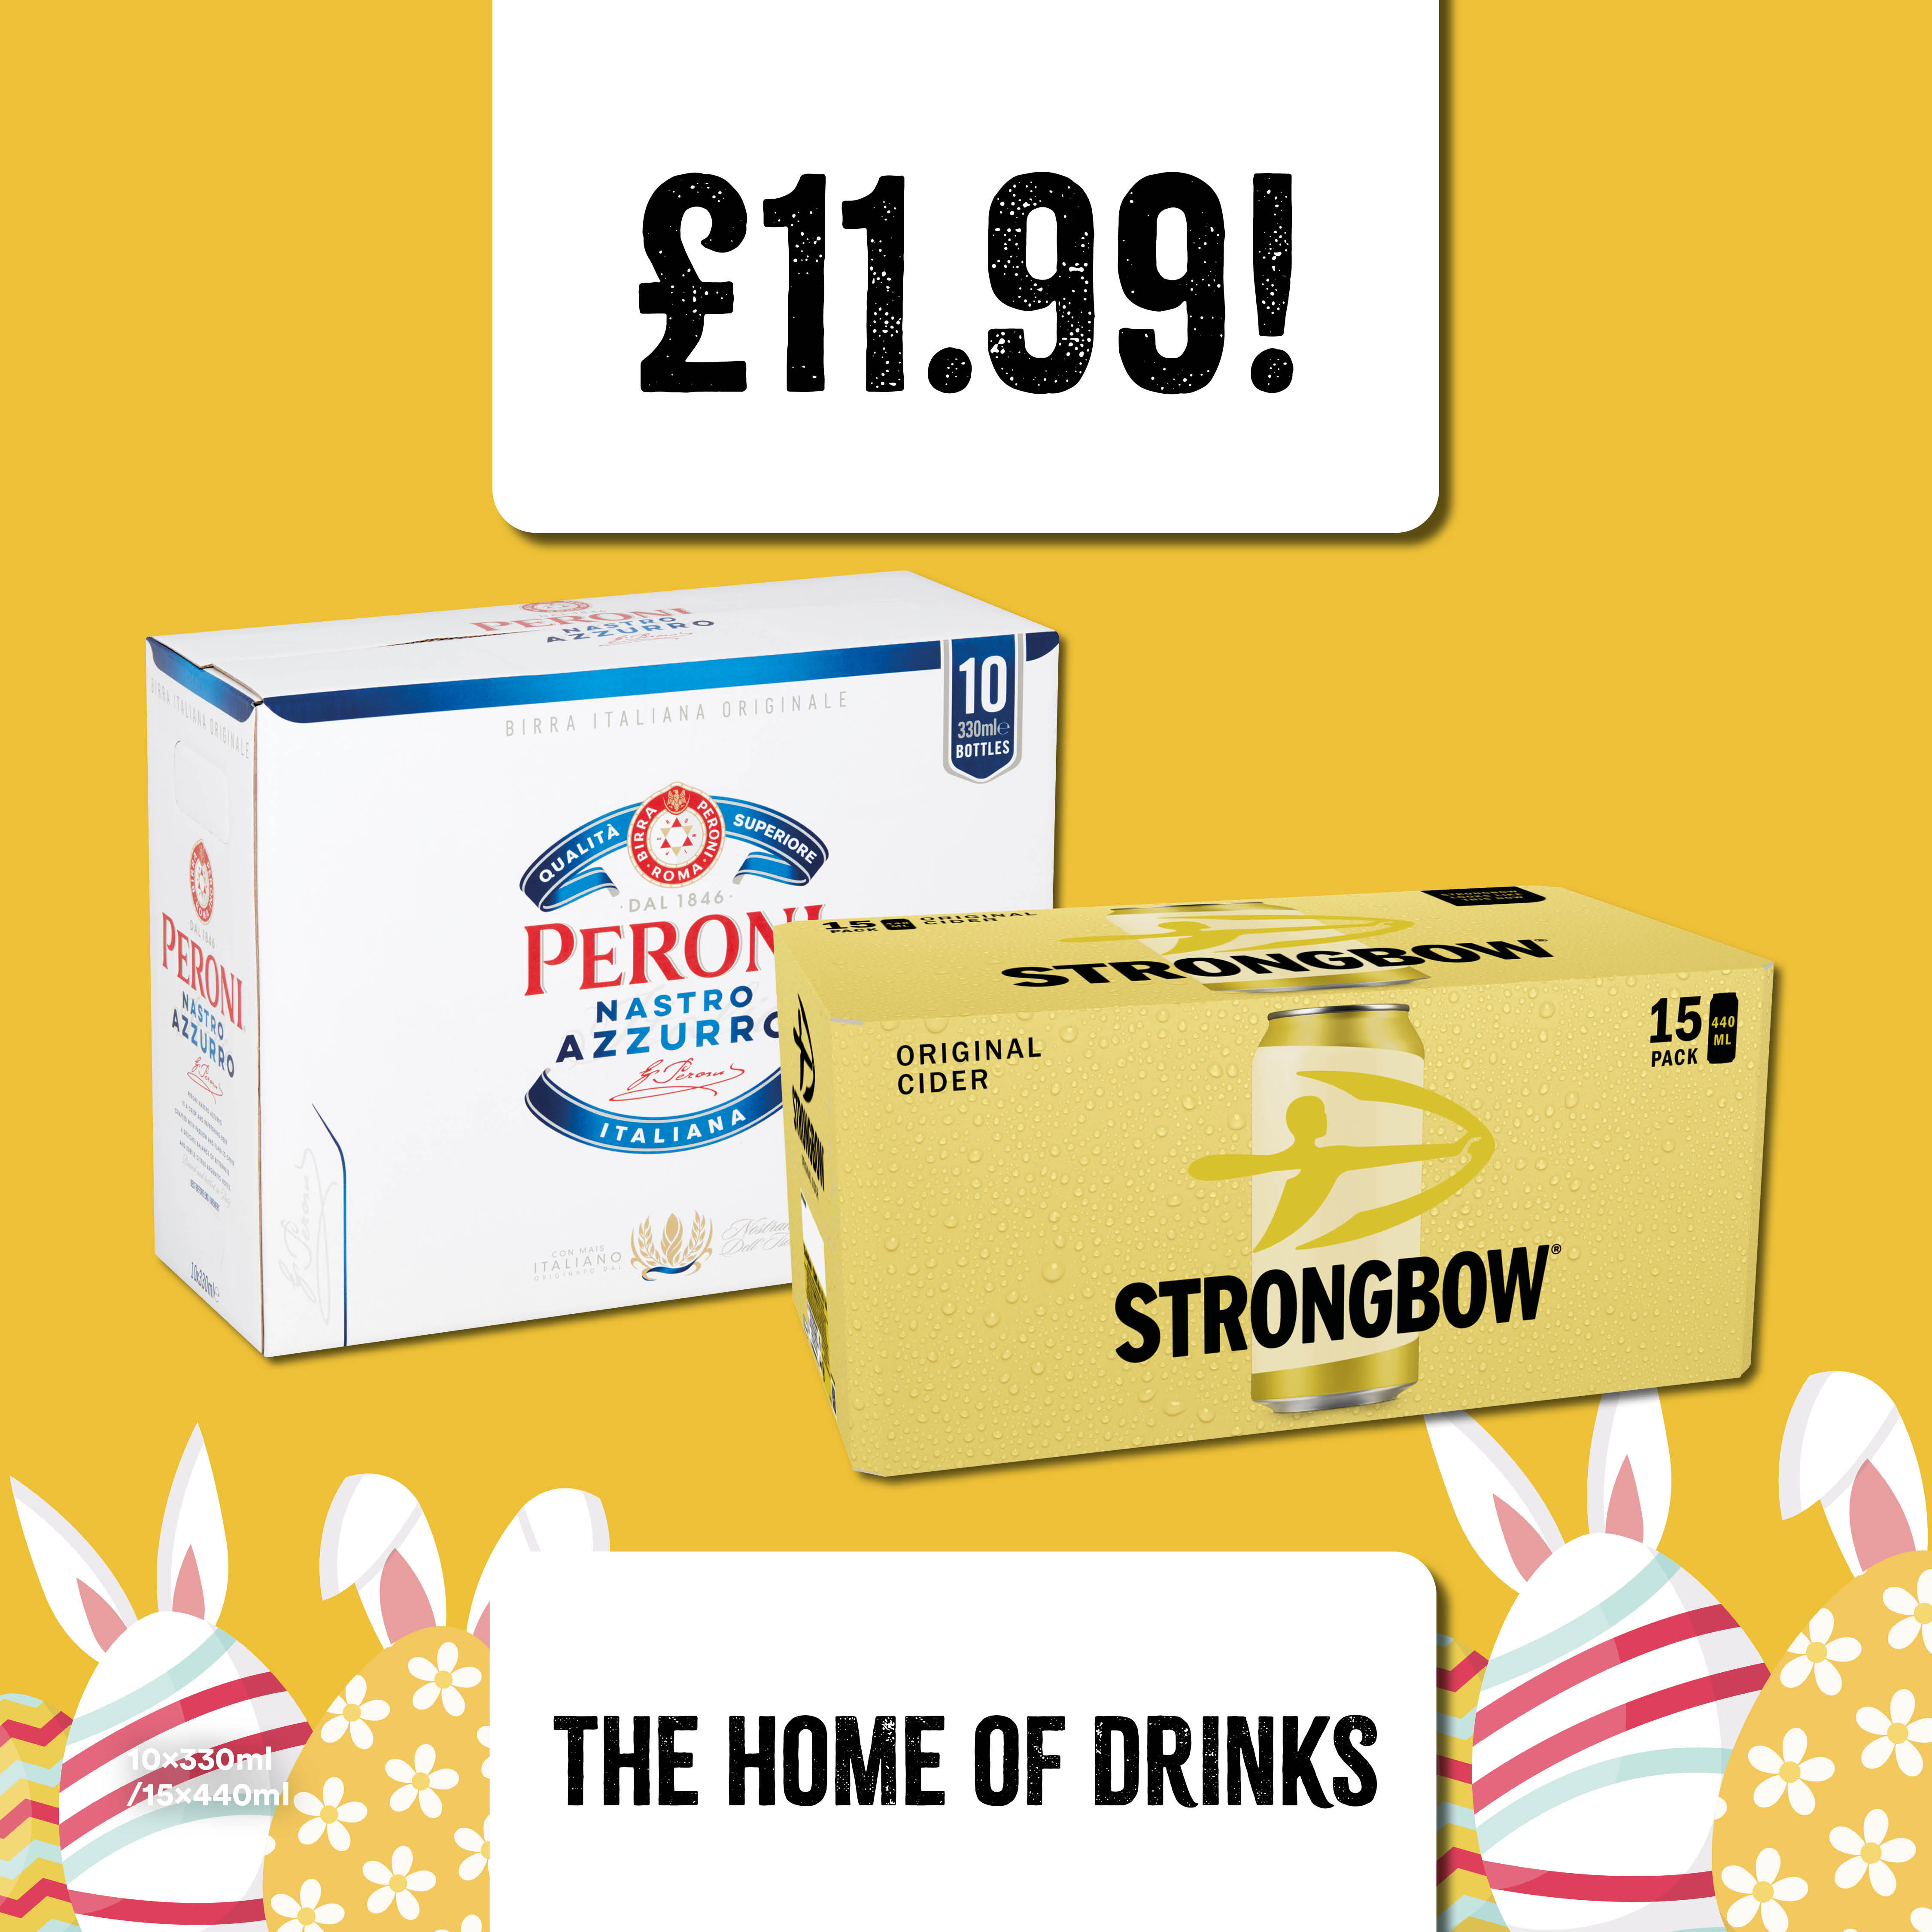 £11.99 - Peroni 10 x 330ml and Strongbow 15 x 440ml Bargain Booze Select Convenience Carlisle 01228 590714